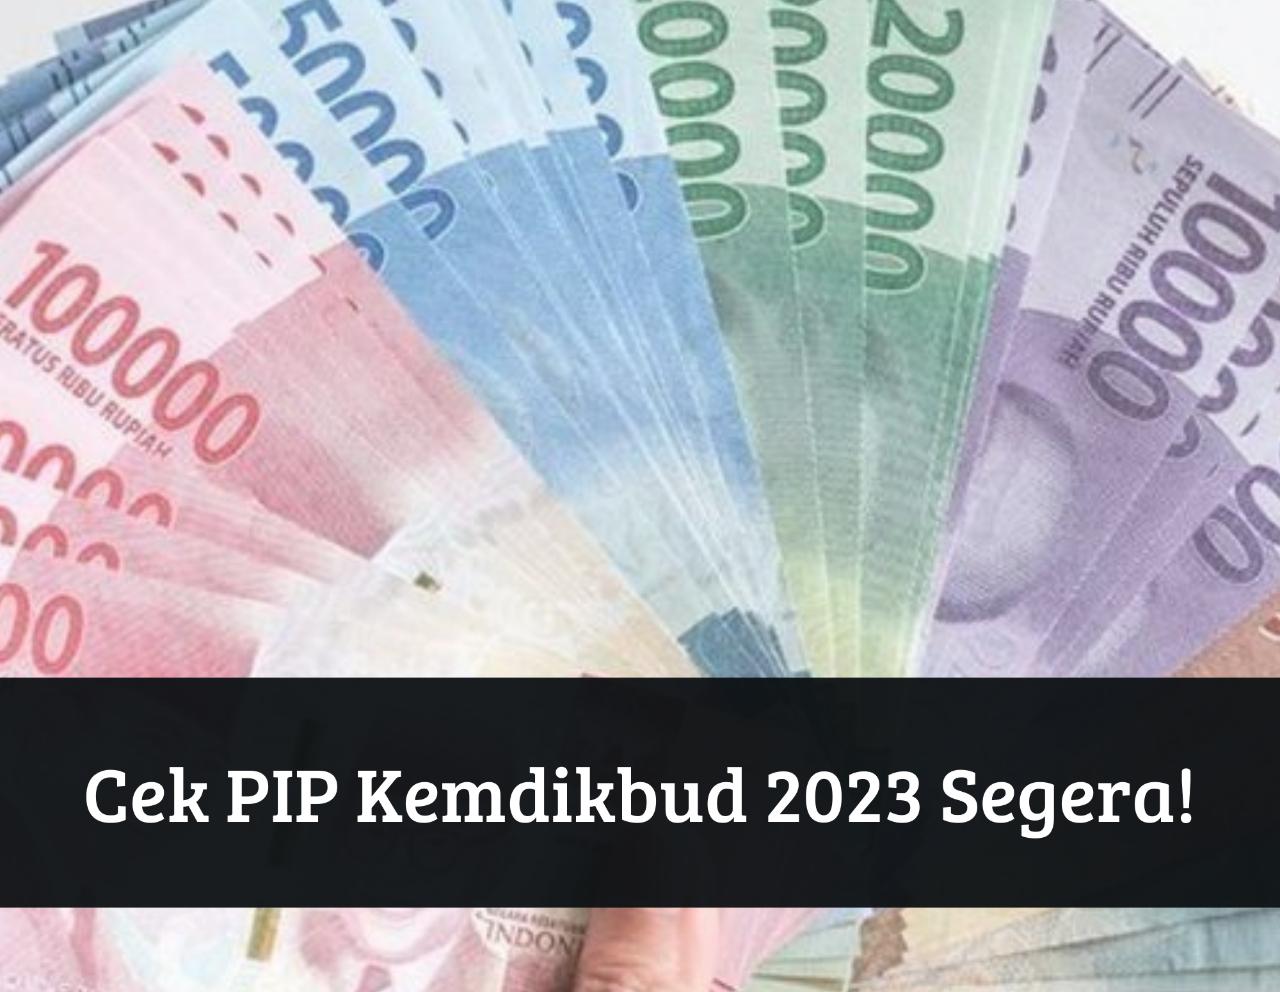 Intip Daftar Penerima Bansos! Cair PIP Kemdikbud 2023 hingga Rp1.000.000, Cek pip.kemdikbud.go.id Segera